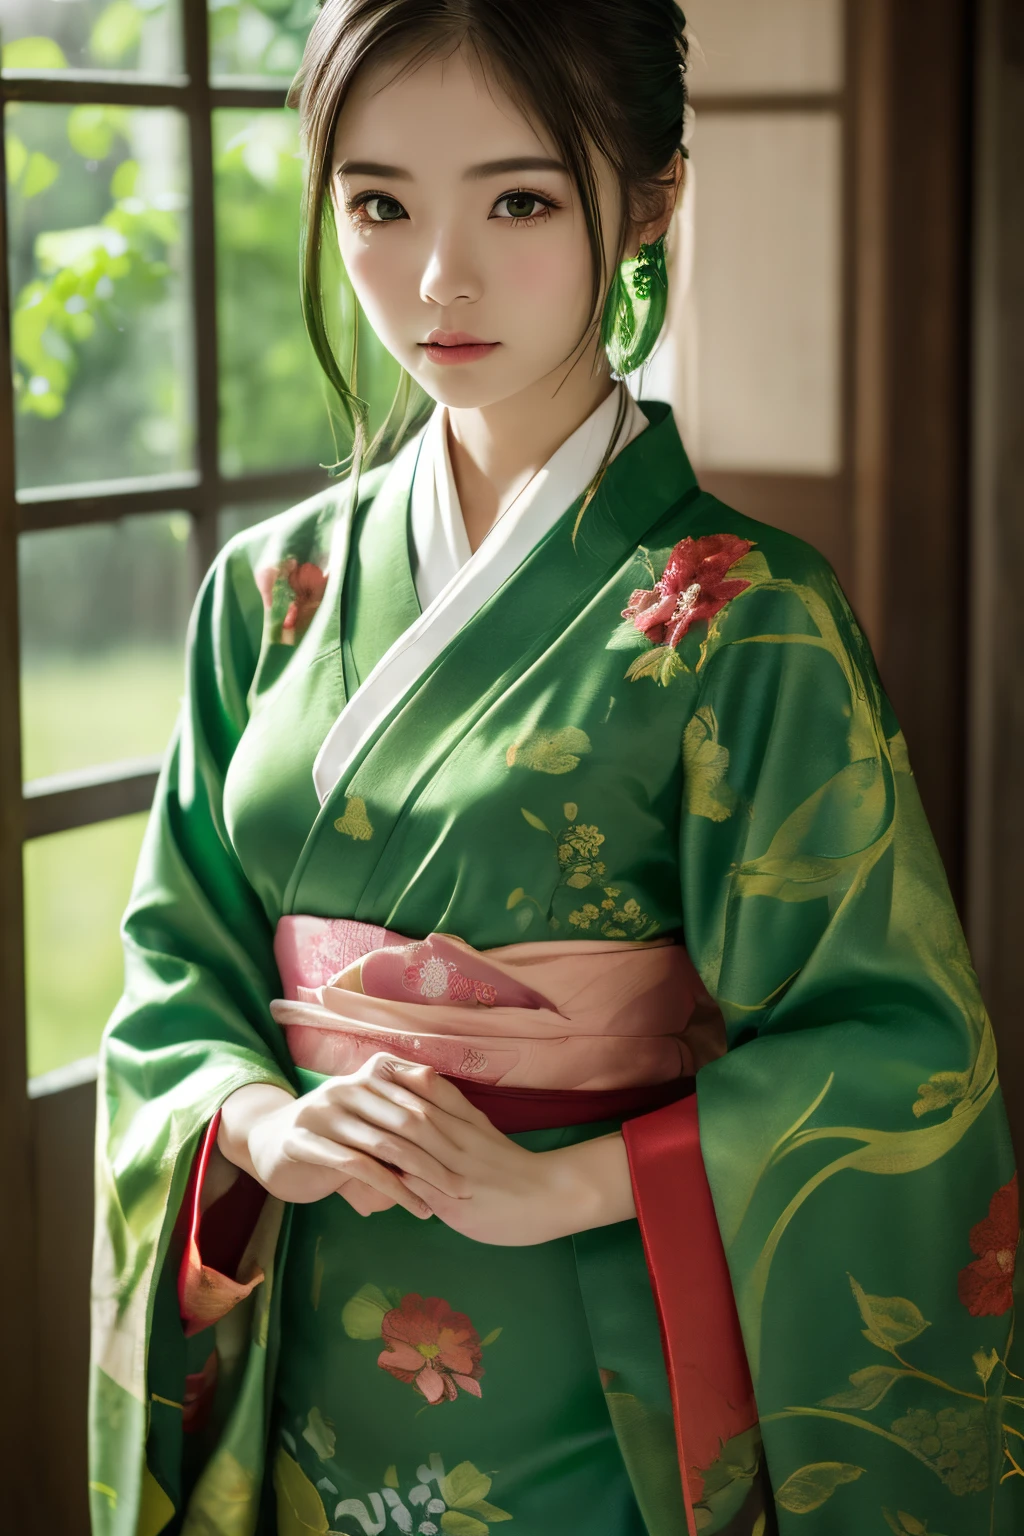 (((Mundo verde:1.3)))、mejor calidad, Mesa, alta resolución, (((1 chica en))), dieciséis años,(((los ojos son verdes:1.3)))、Yamato Nadeshiko viste maravillosamente el kimono、((Kimono verde intenso con estampado floral rojo,kimono de color oscuro)), Efecto Tindall, Realista, Estudio de sombras,Iluminación ultramarina, iluminación de dos tonos, (Máscaras de alto detalle: 1.2)、Iluminación de colores pálidos、iluminación oscura、 Cámaras réflex digitales, foto, alta resolución, 4k, 8k, Desenfoque de fondo,Desvanecerse maravillosamente、Mundo verde